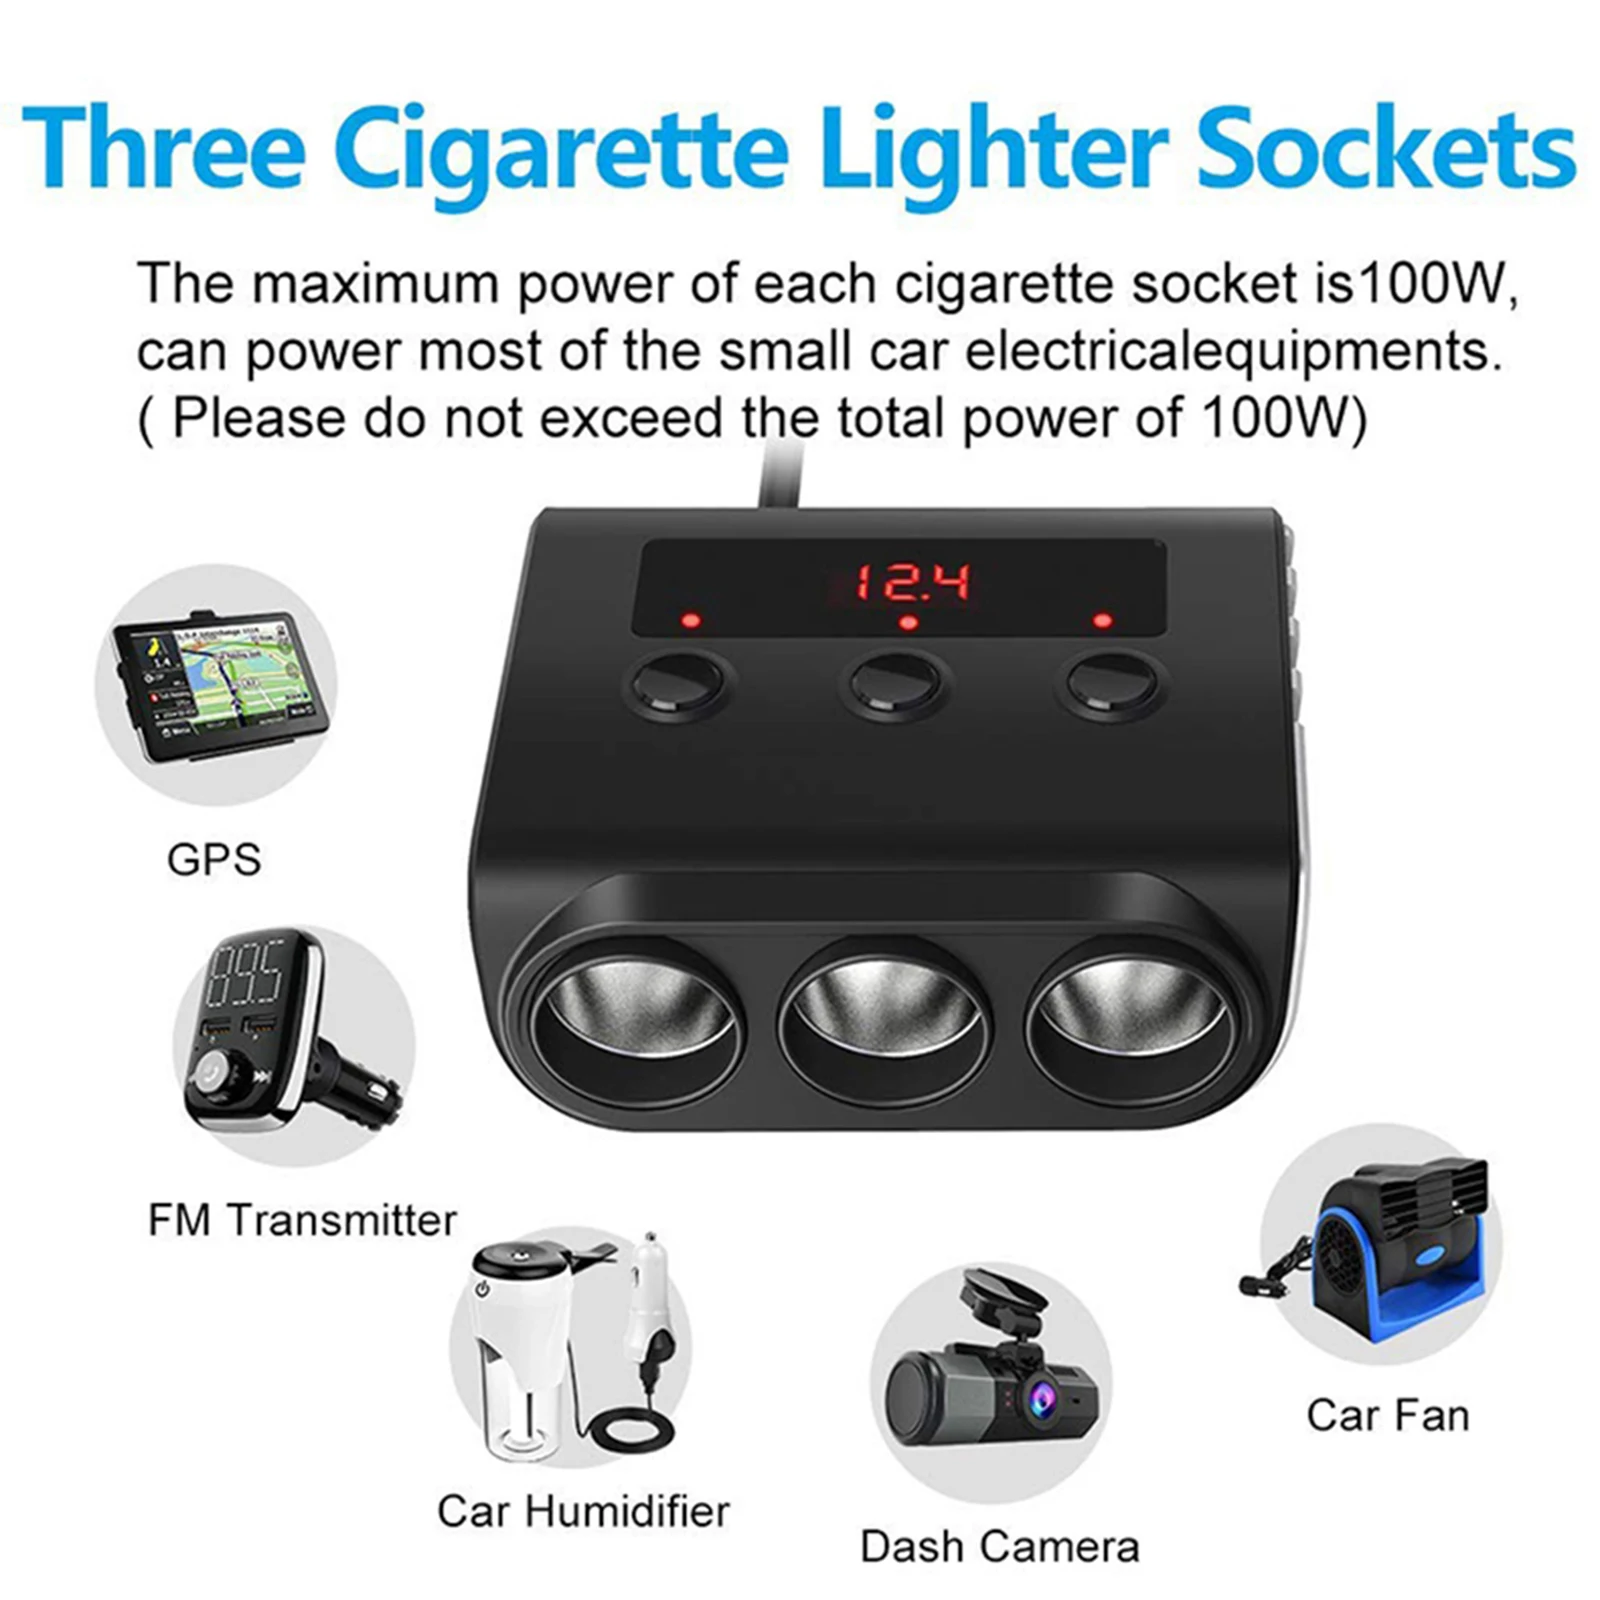 Car Automobile Cigarette Lighter Adapter 12V/24V DC Power Adaptor with Replace Fuse Voltage Display for GPS Dashcam